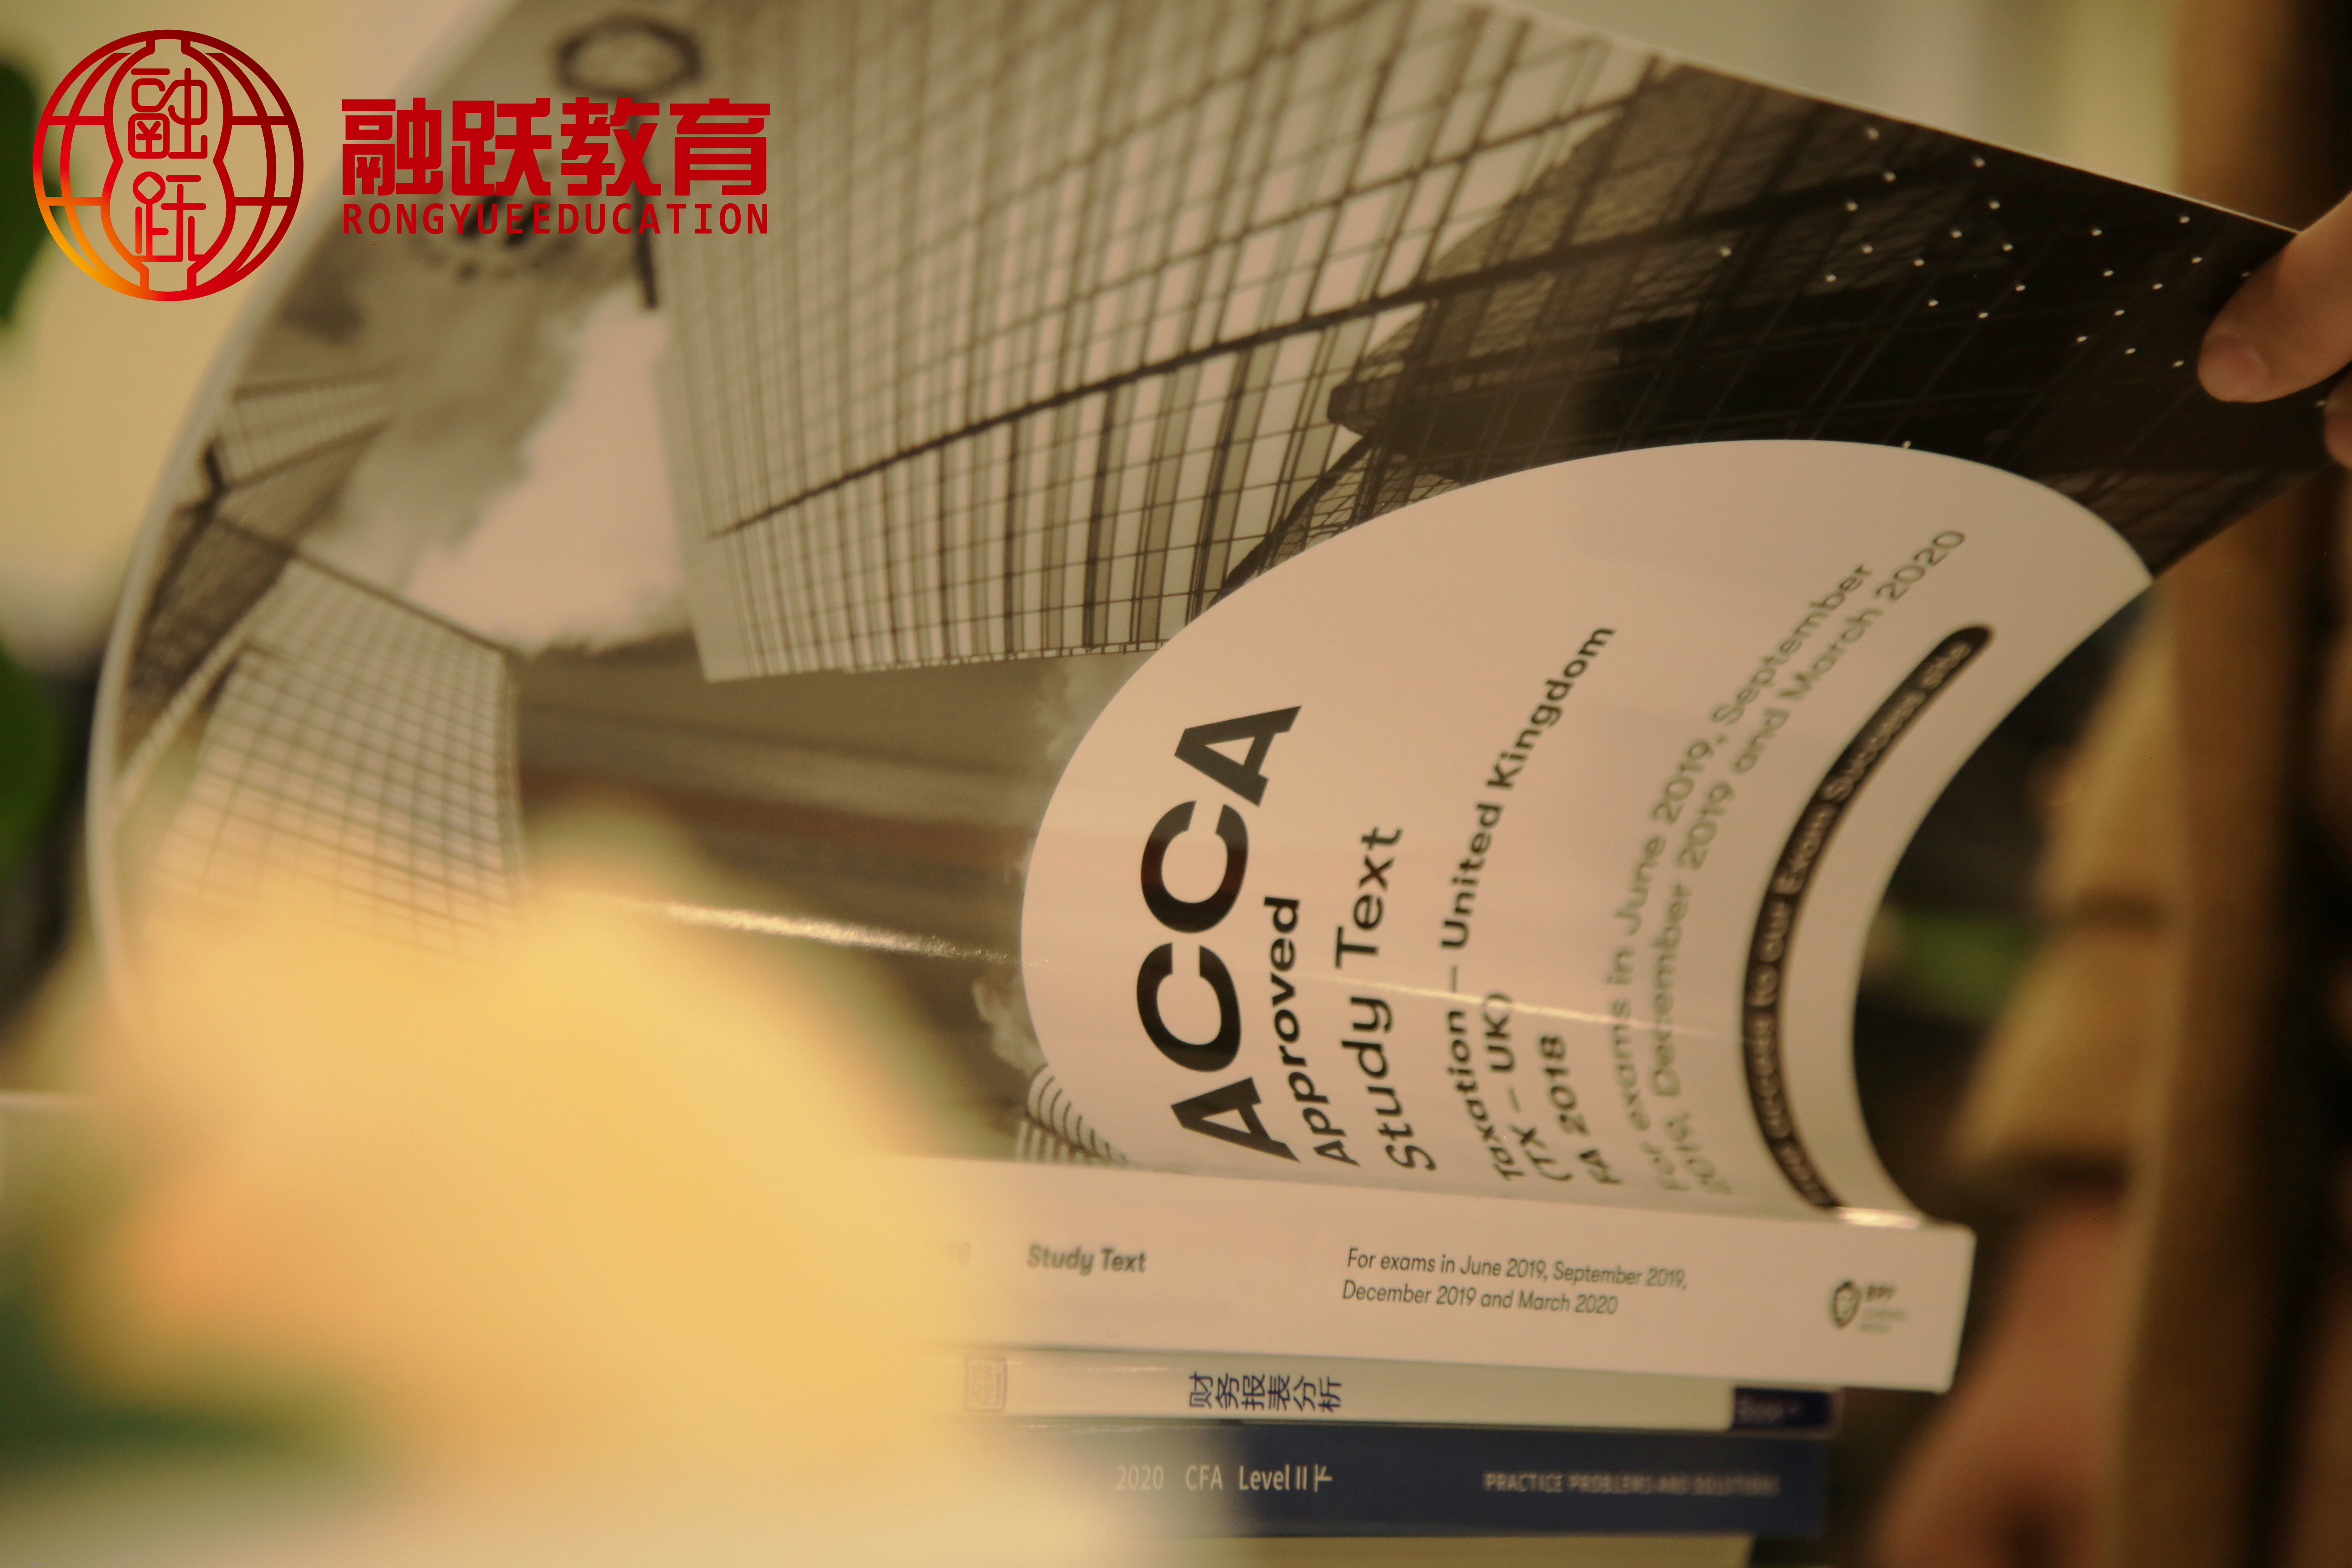 ACCA哪里可以找到中文版的教材呢？